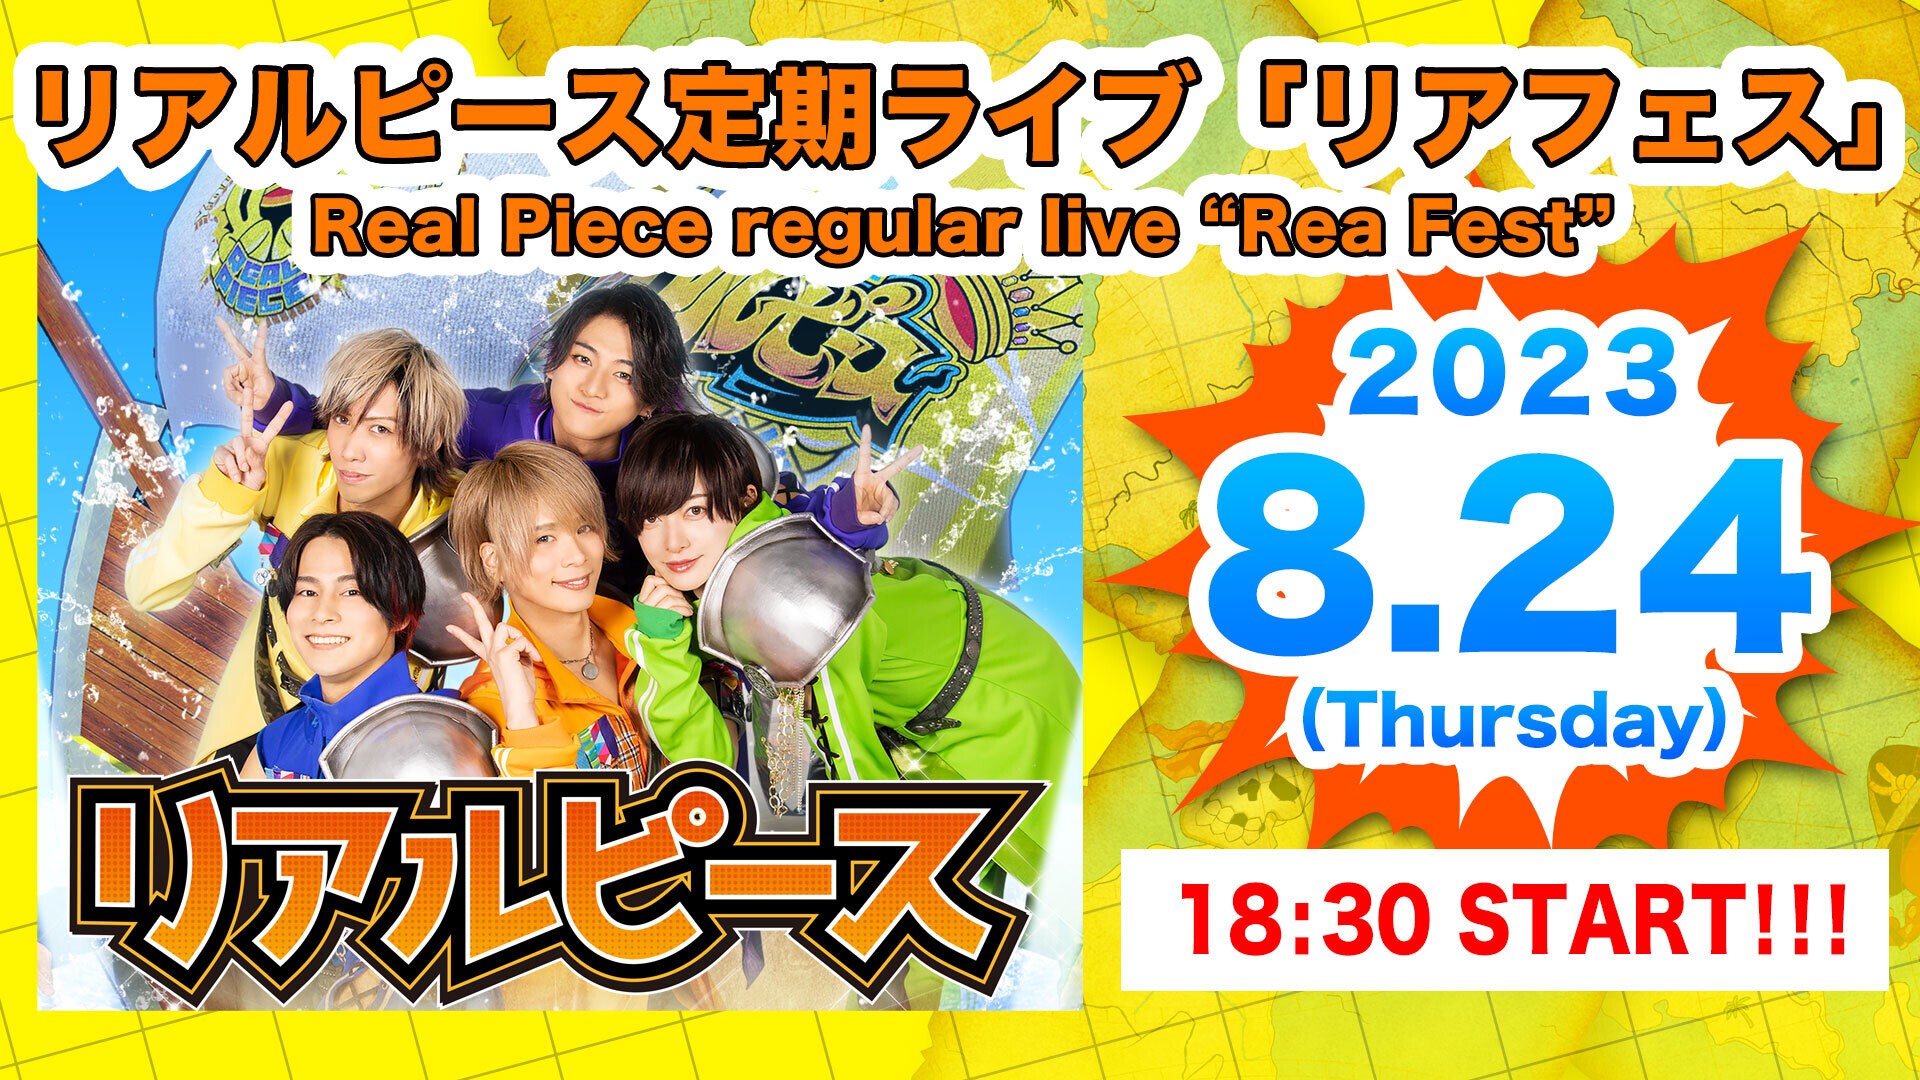 August 24. Real Piece regular live “Rea Fest” | リアルピース